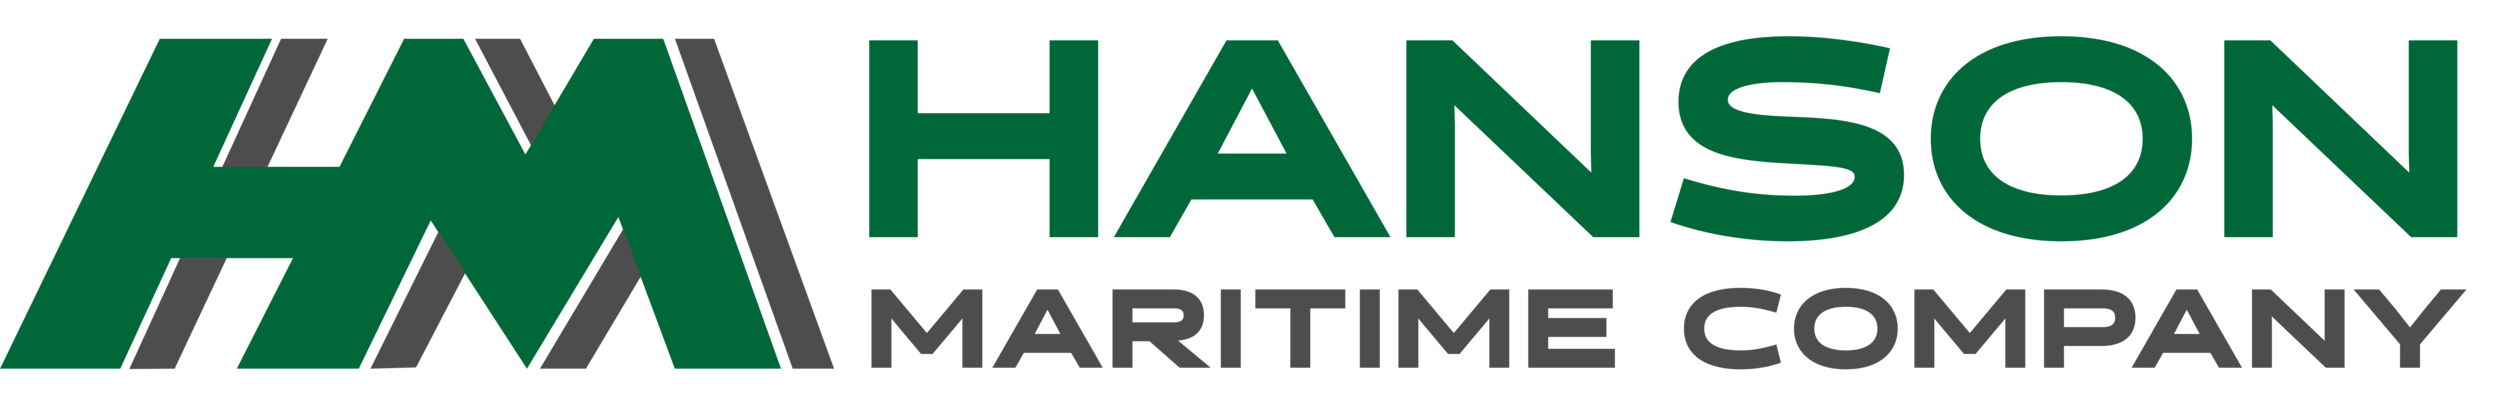 Hanson Maritime Company